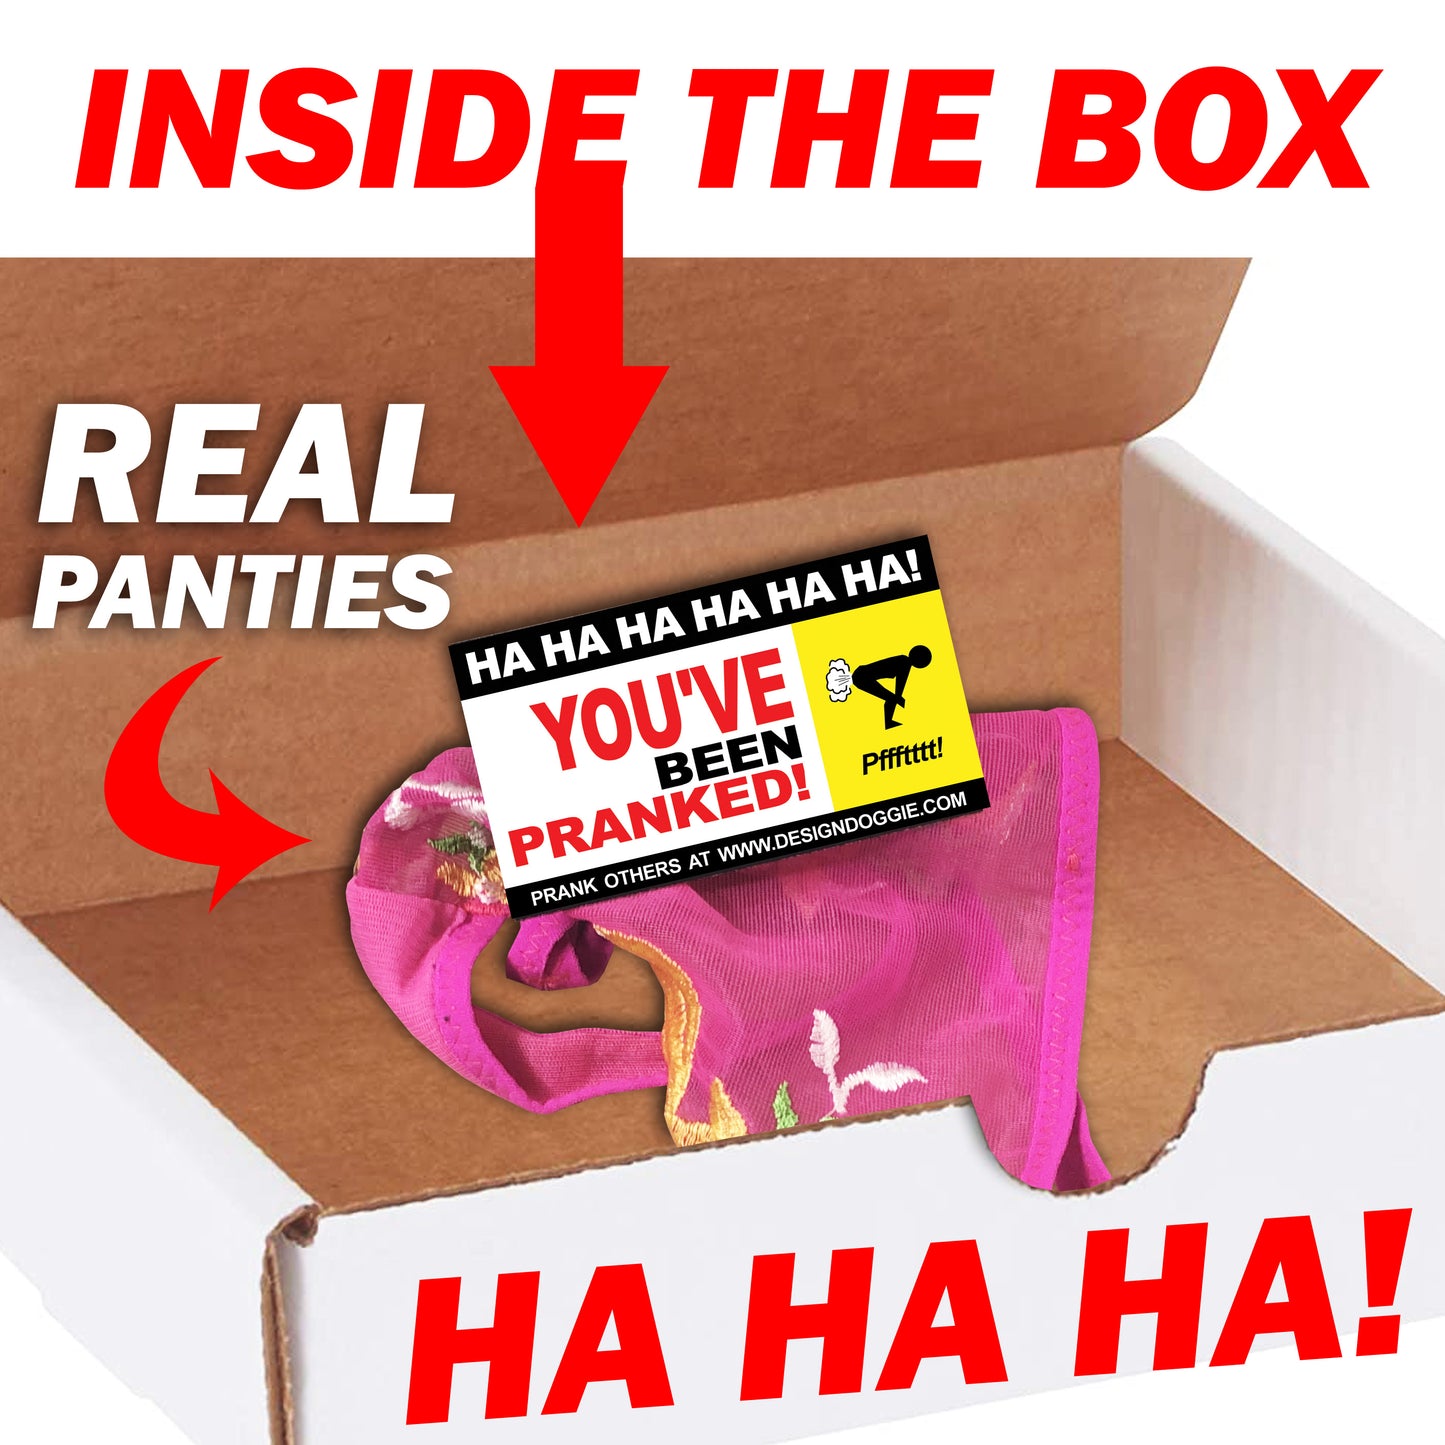 Used Panties Joke Box